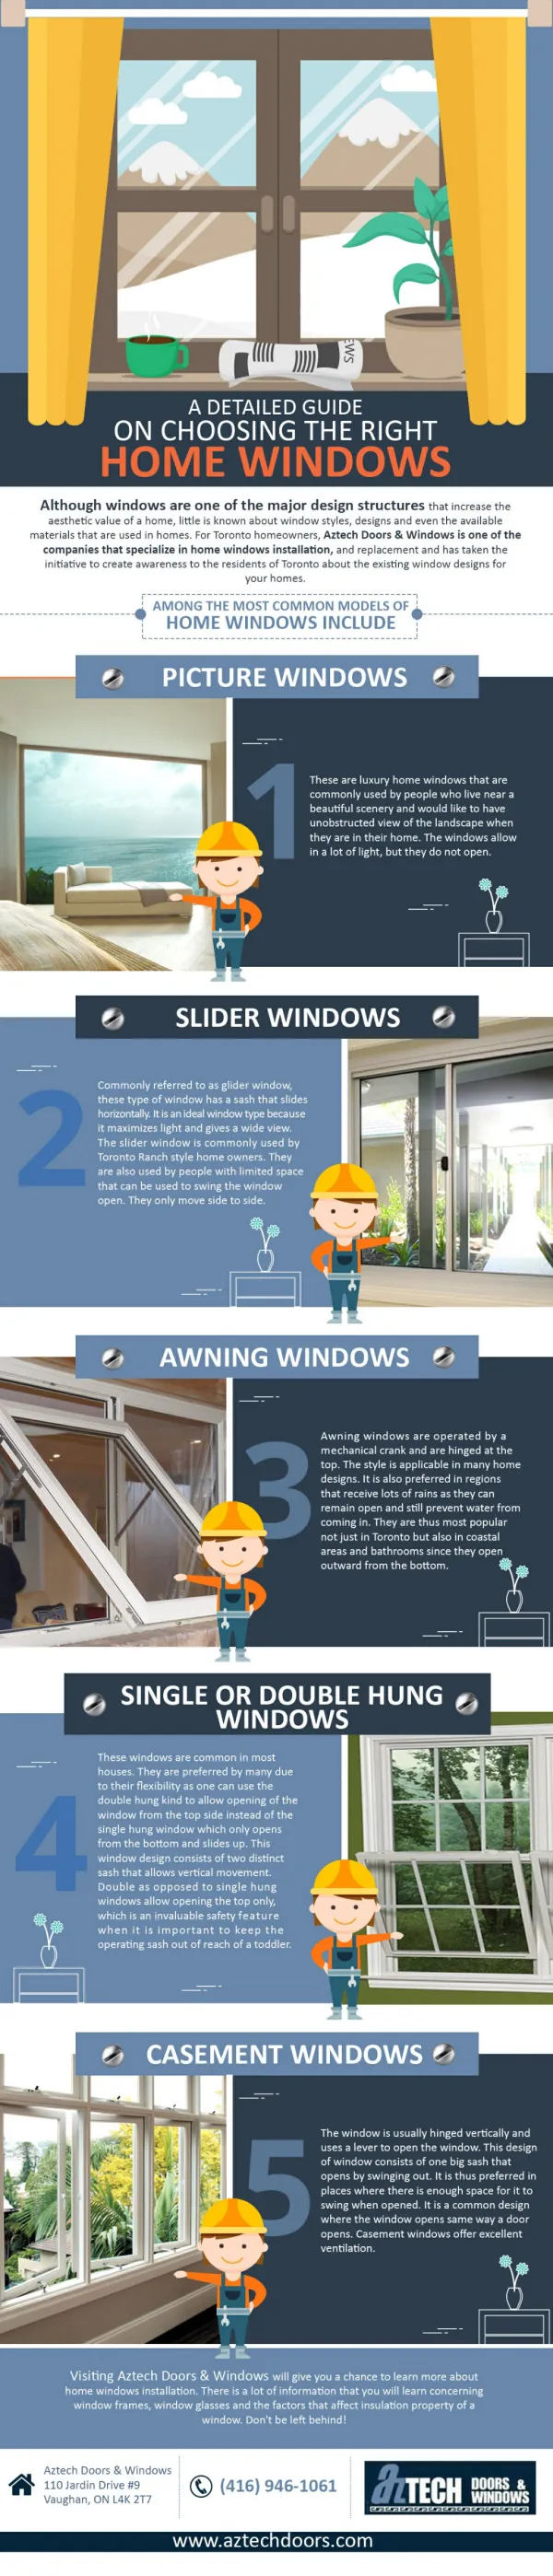 Guide on Choosing Home Windows